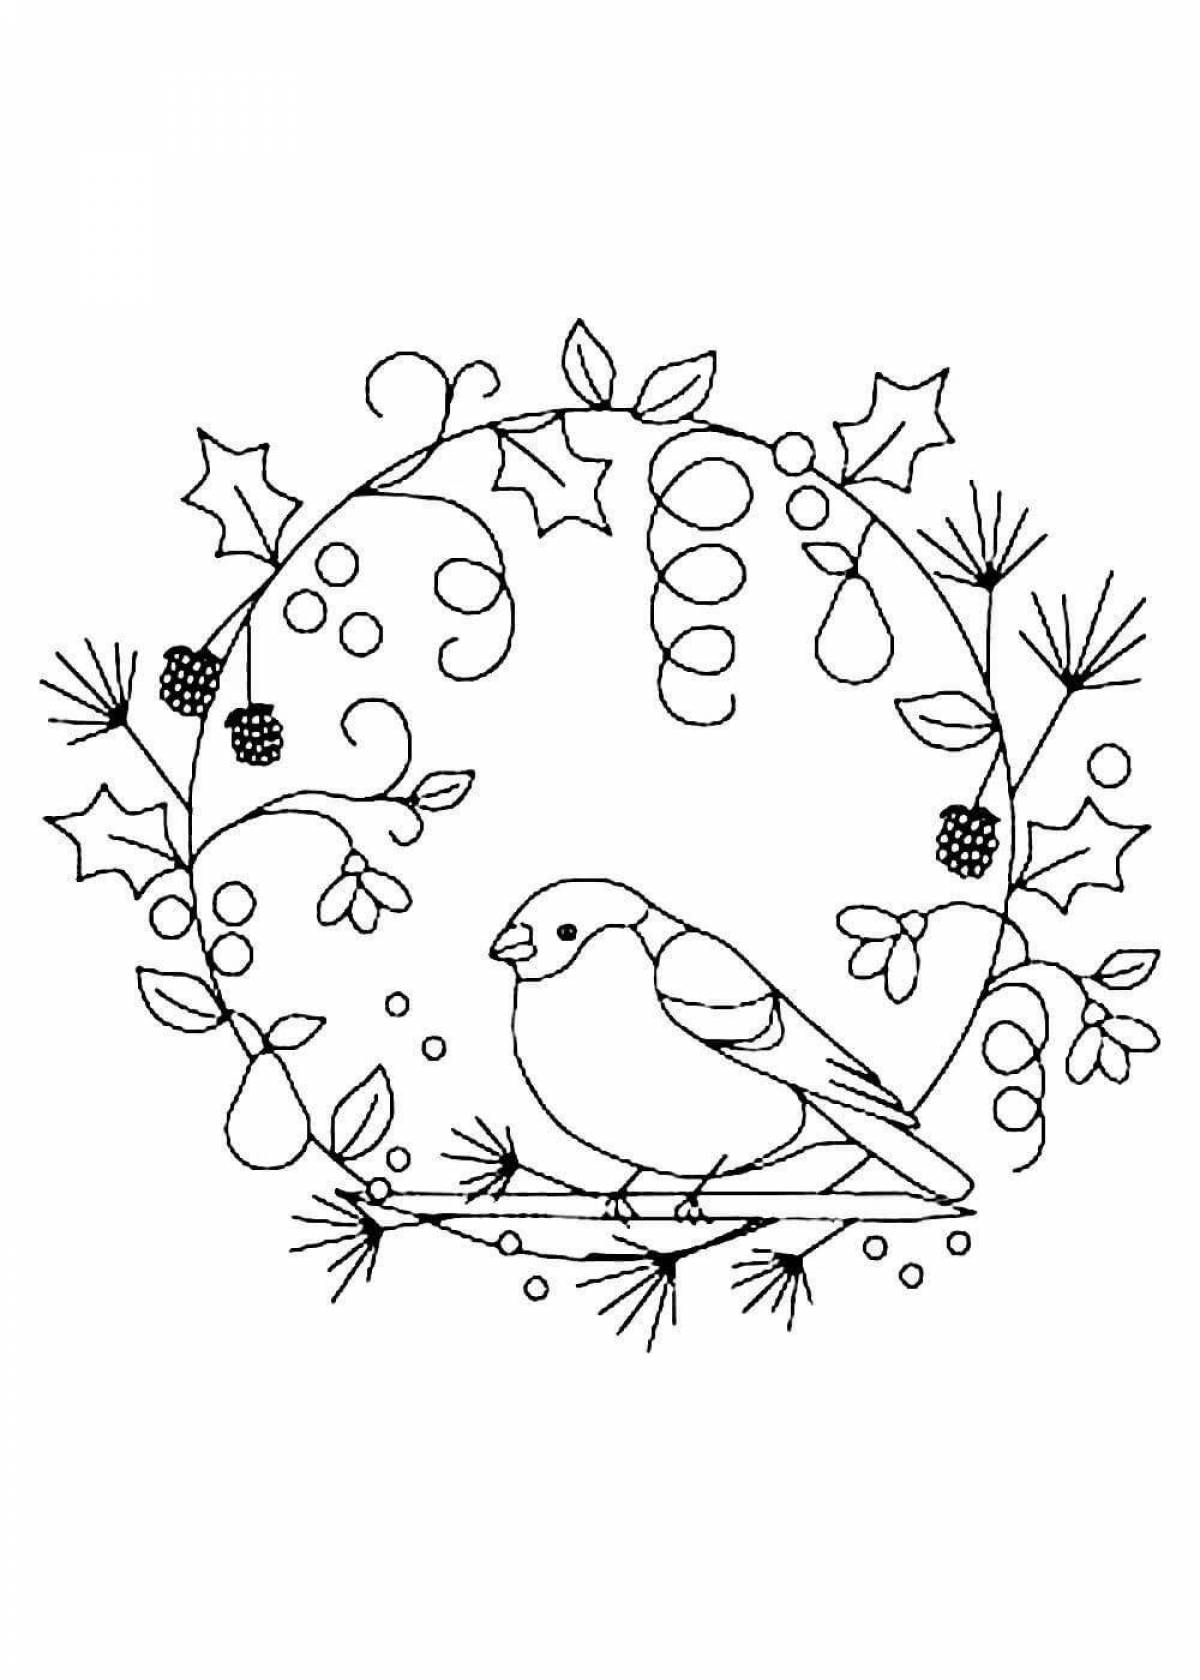 Delightful drawing of a bullfinch on a rowan branch